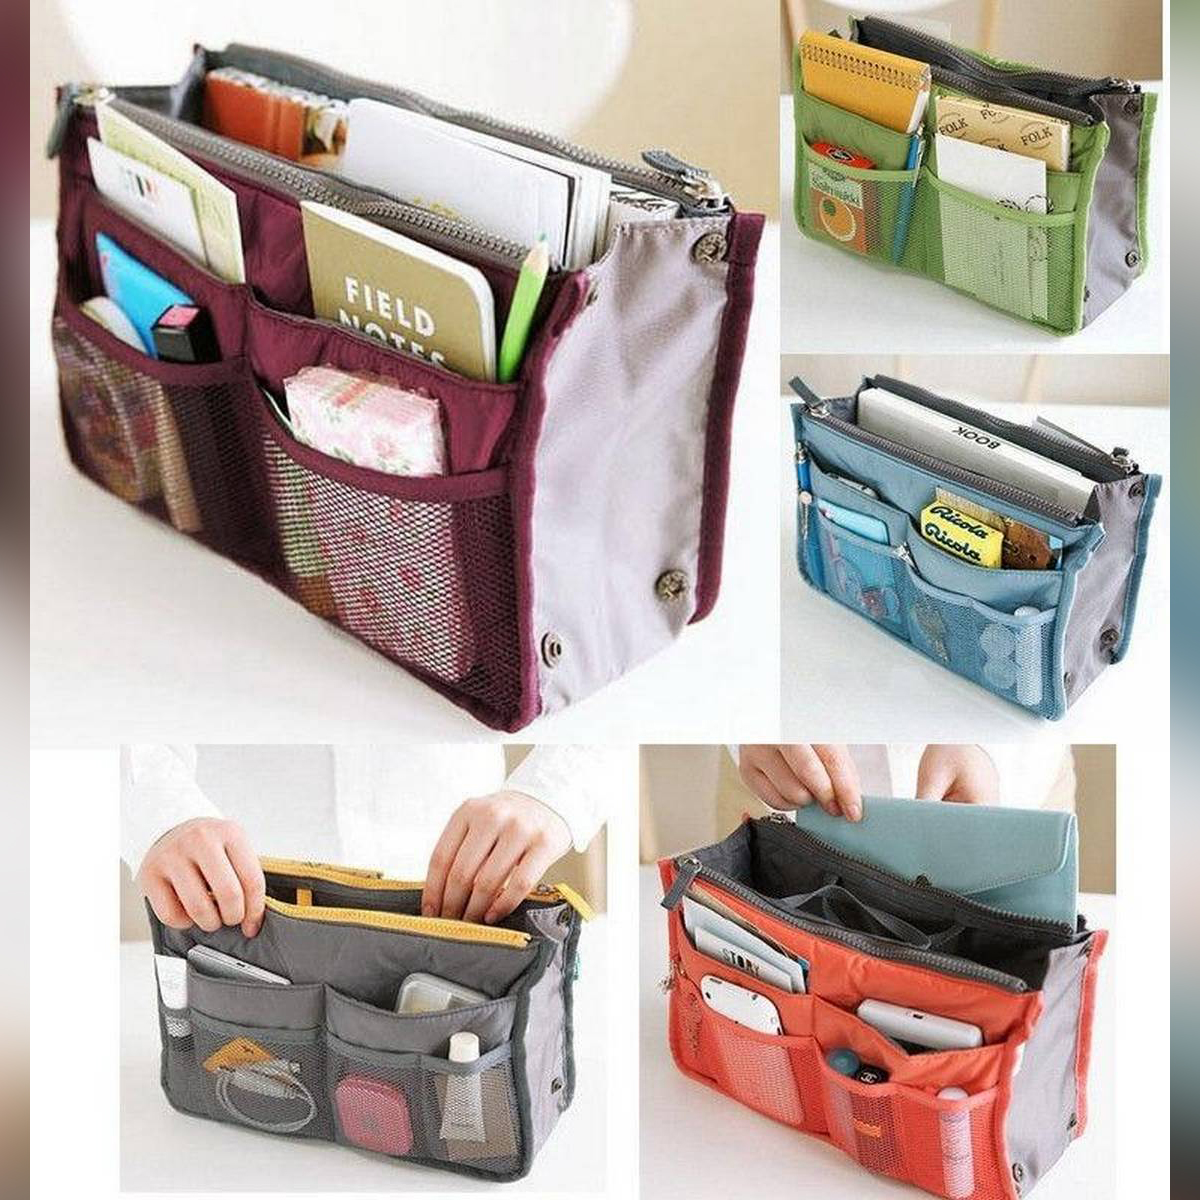 Organizer,Bag Organizer,Insert purse organizer with 2 packs in one set –  Luxury Handbags and more